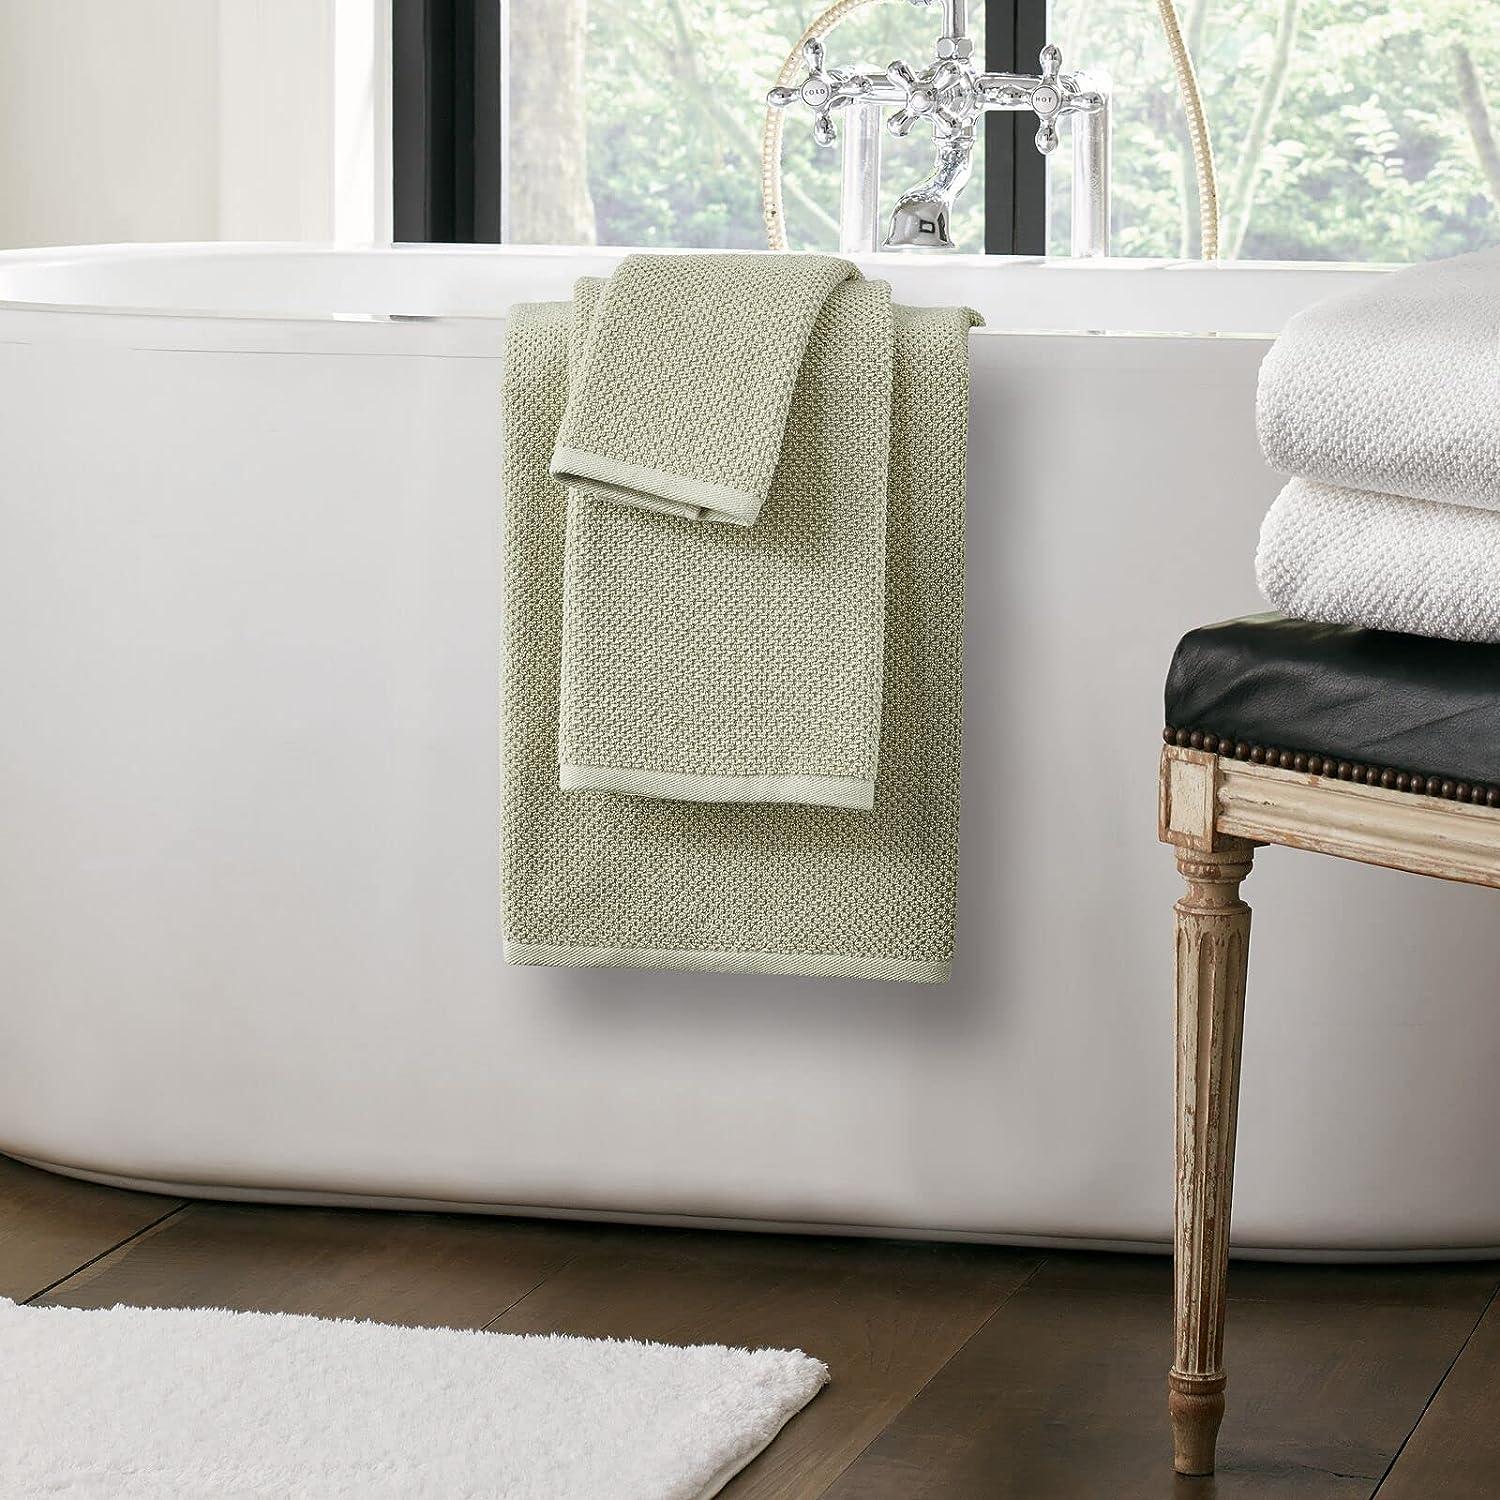 Hand towel - Bath sheet